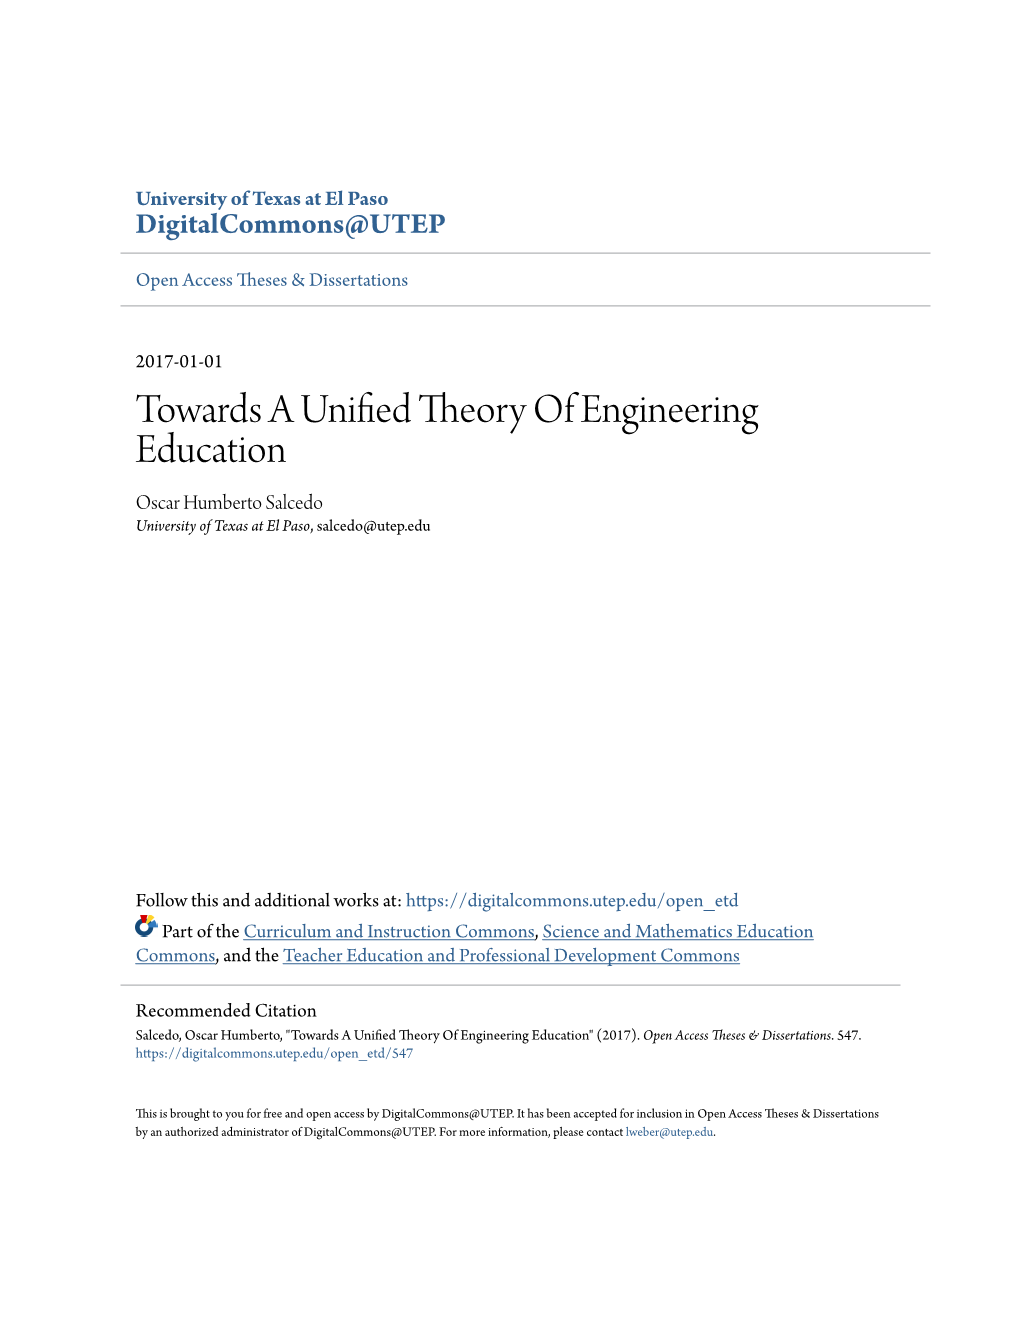 Towards a Unified Theory of Engineering Education Oscar Humberto Salcedo University of Texas at El Paso, Salcedo@Utep.Edu